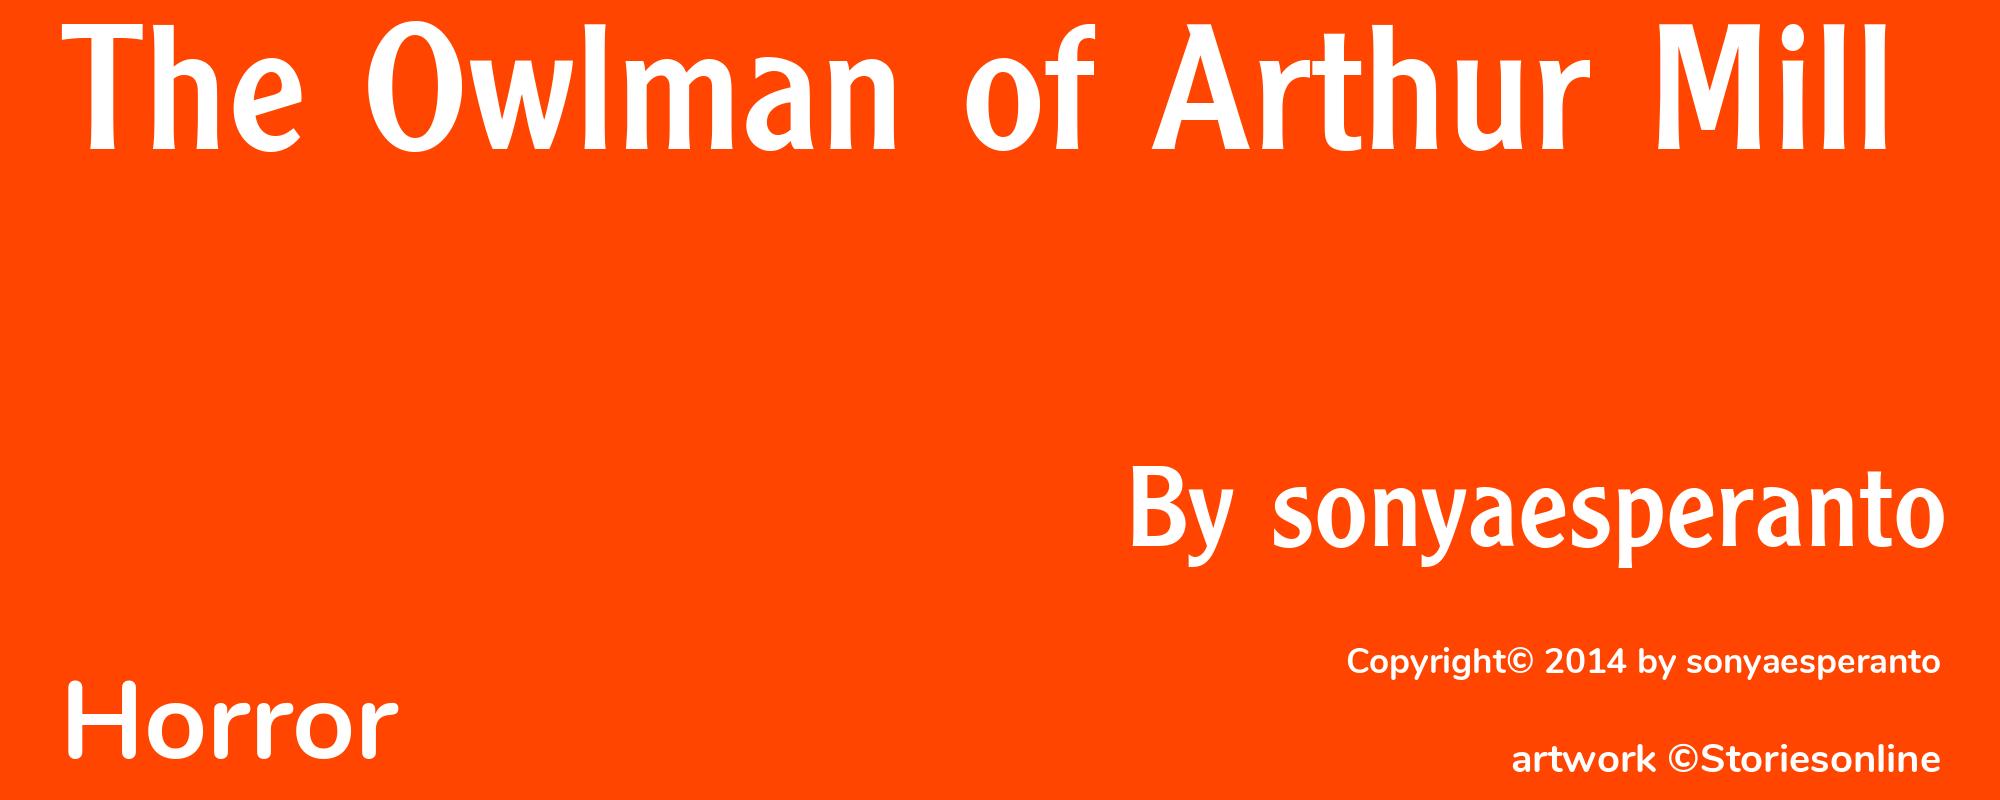 The Owlman of Arthur Mill - Cover